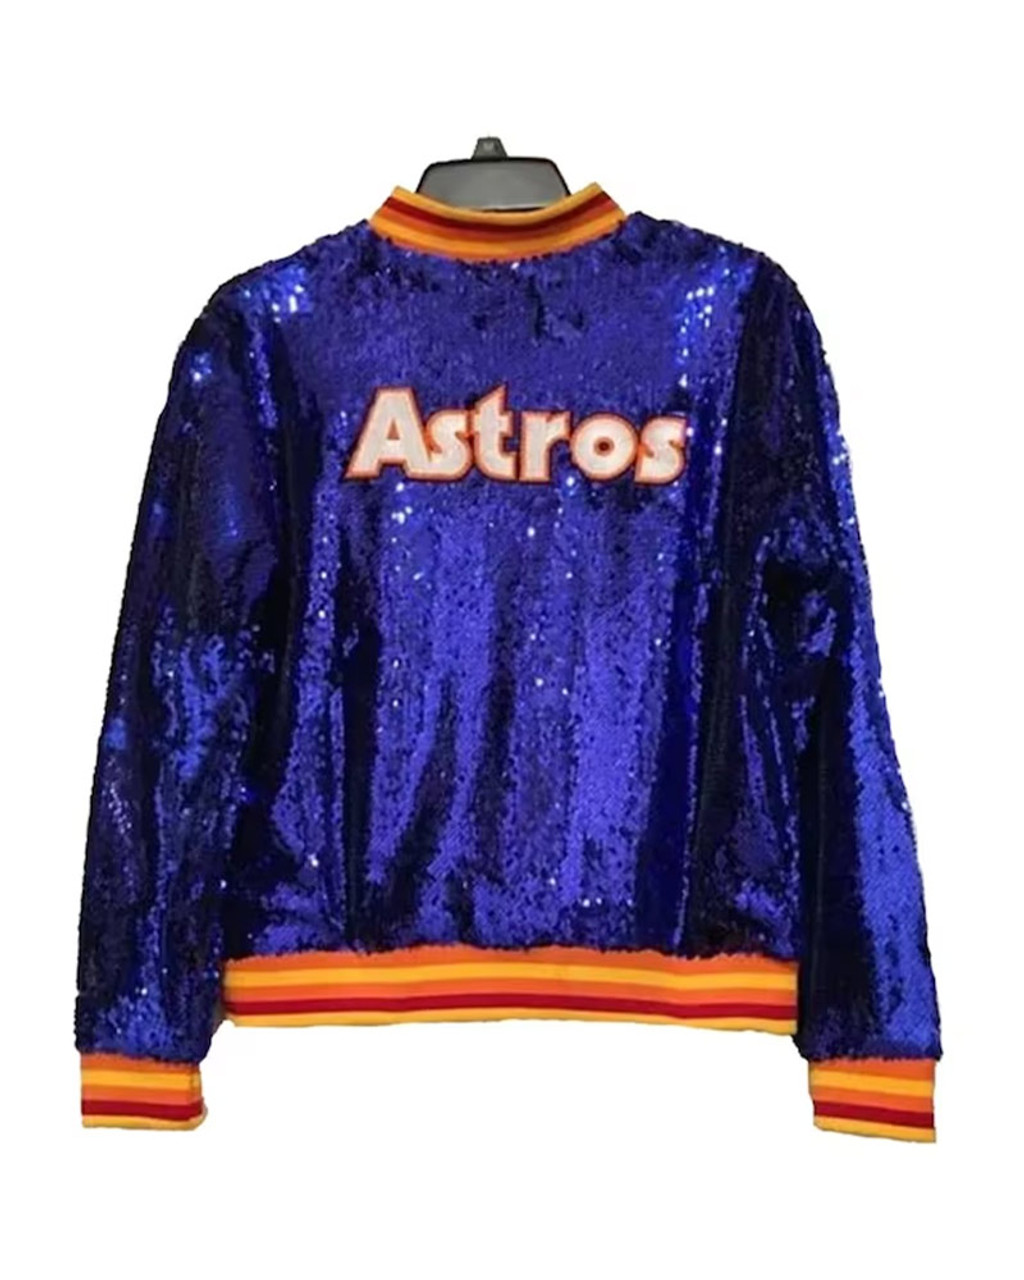 Men's Houston Astros Leather Jacket - Jacket Makers